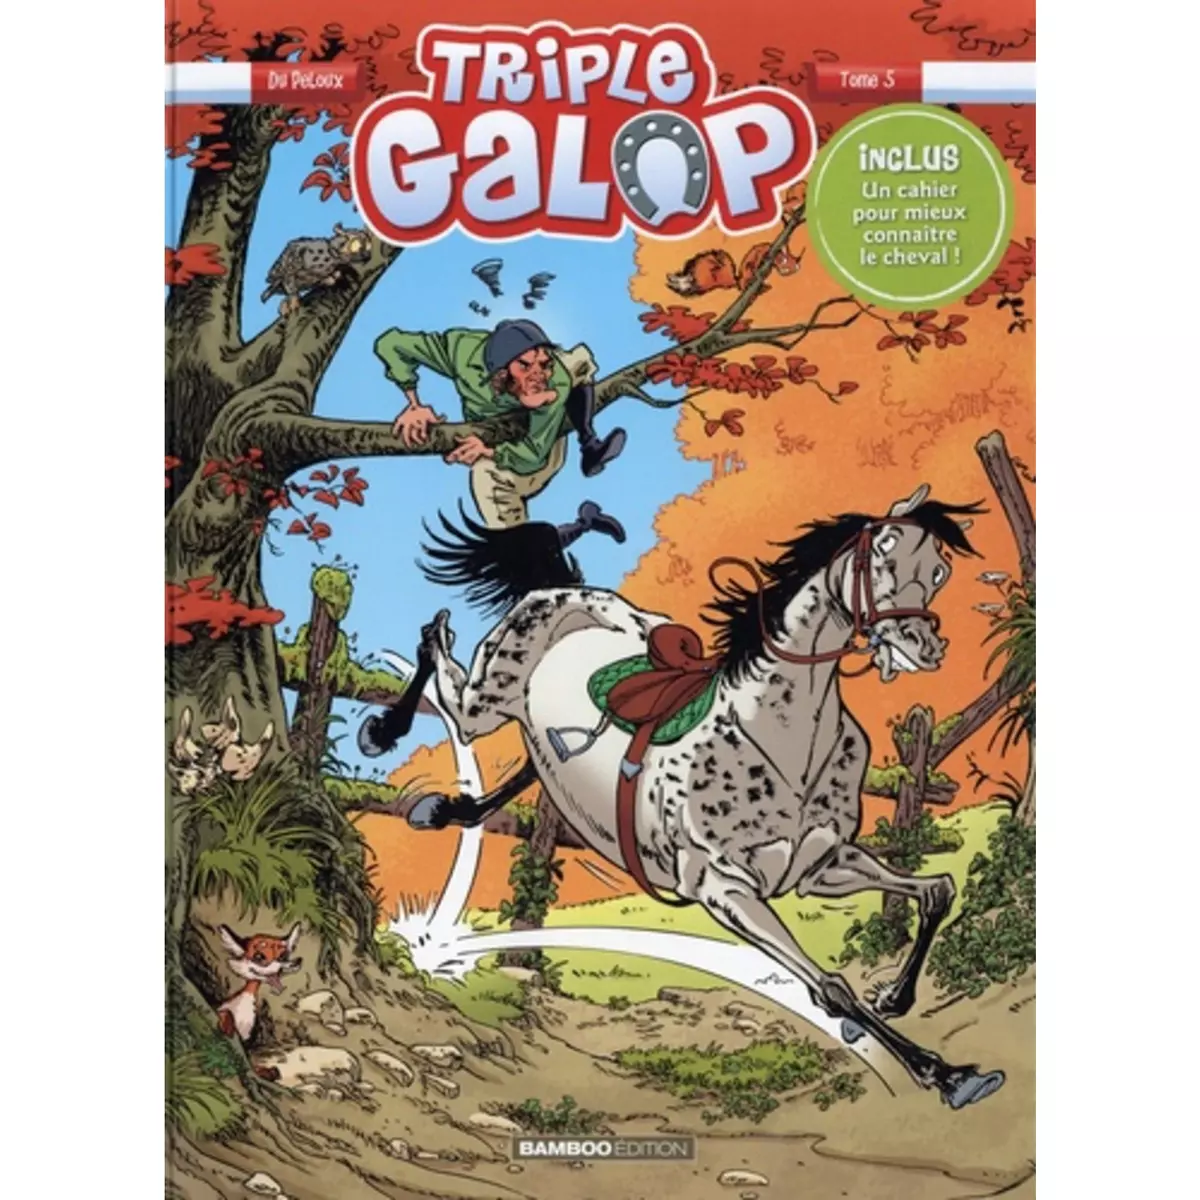  TRIPLE GALOP TOME 5 , Du Peloux Benoît